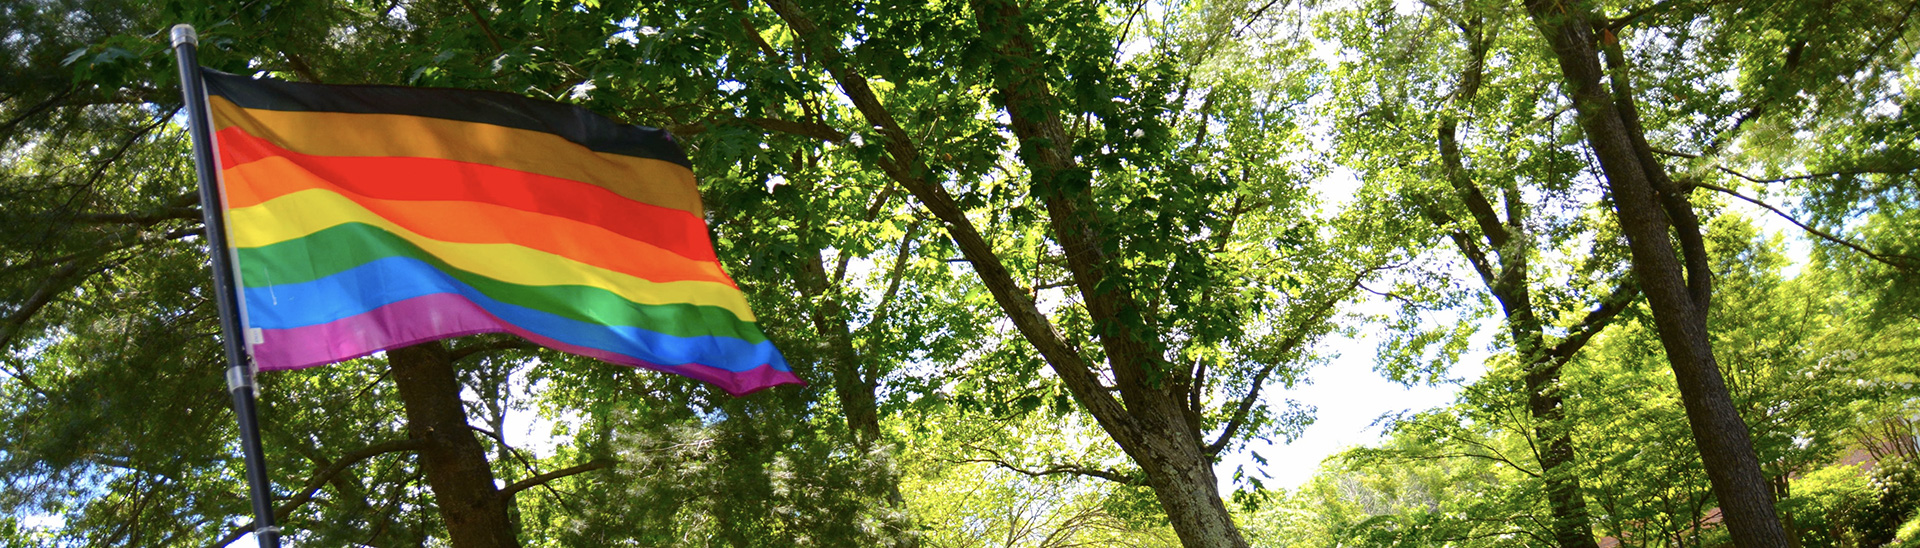 Waving rainbow flag